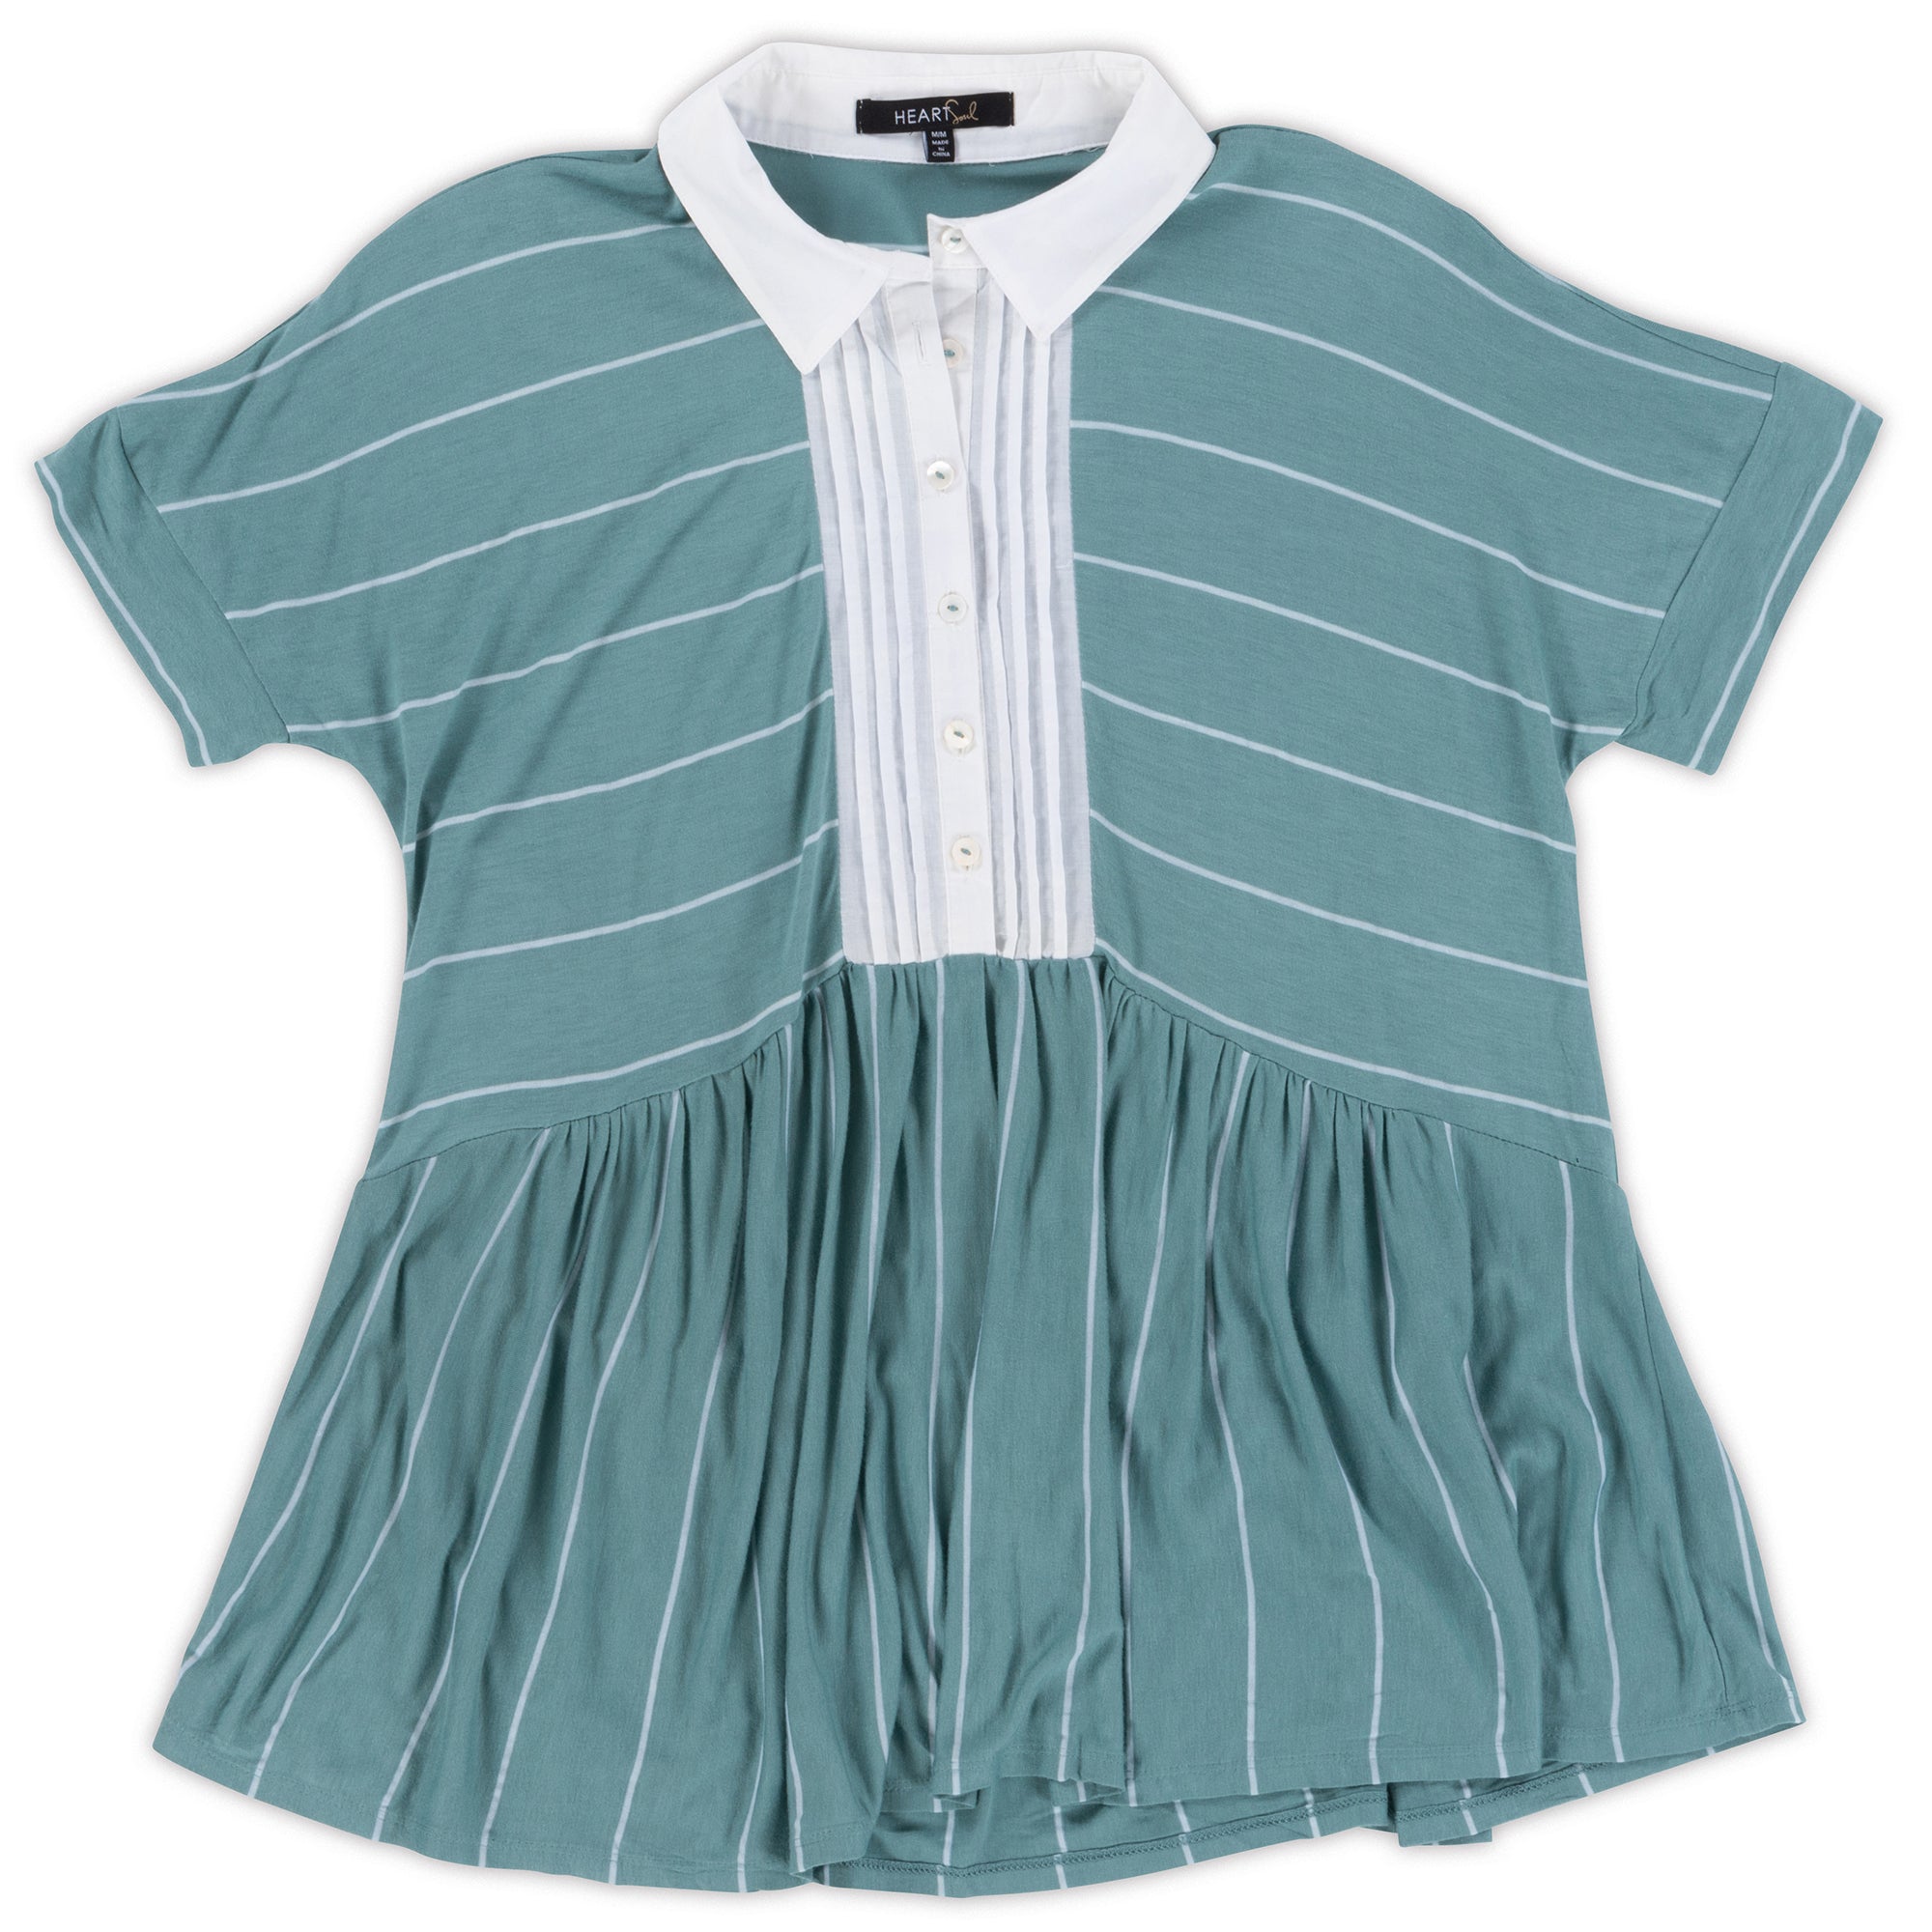 Women's Short Sleeves Top w/Stripes - 1 Color/4 Sizes - 8pcs/pack ($5.55/pc)